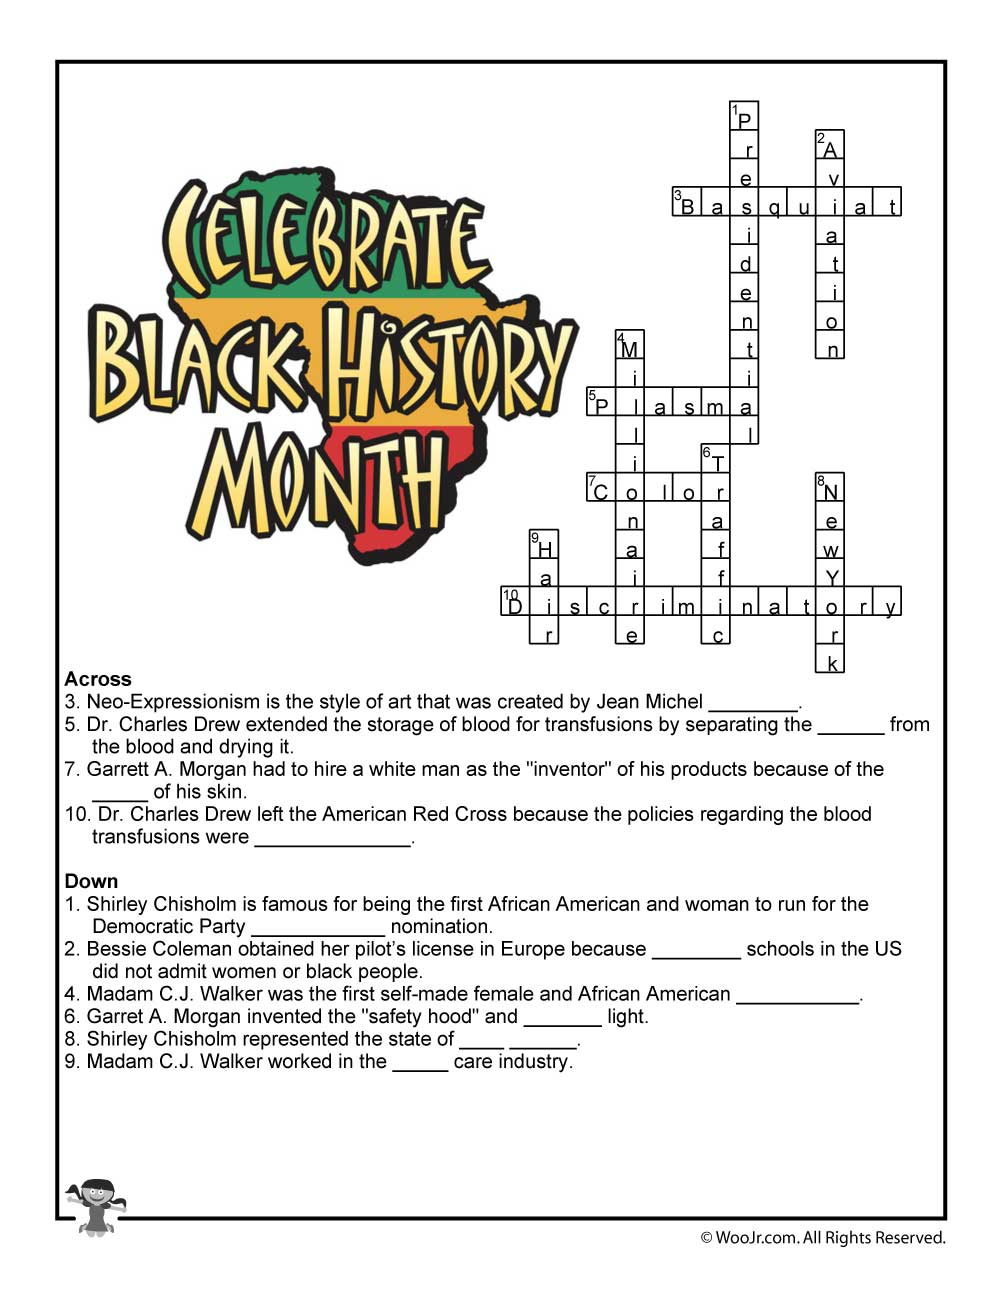 Black History Month Crossword Puzzle Printable